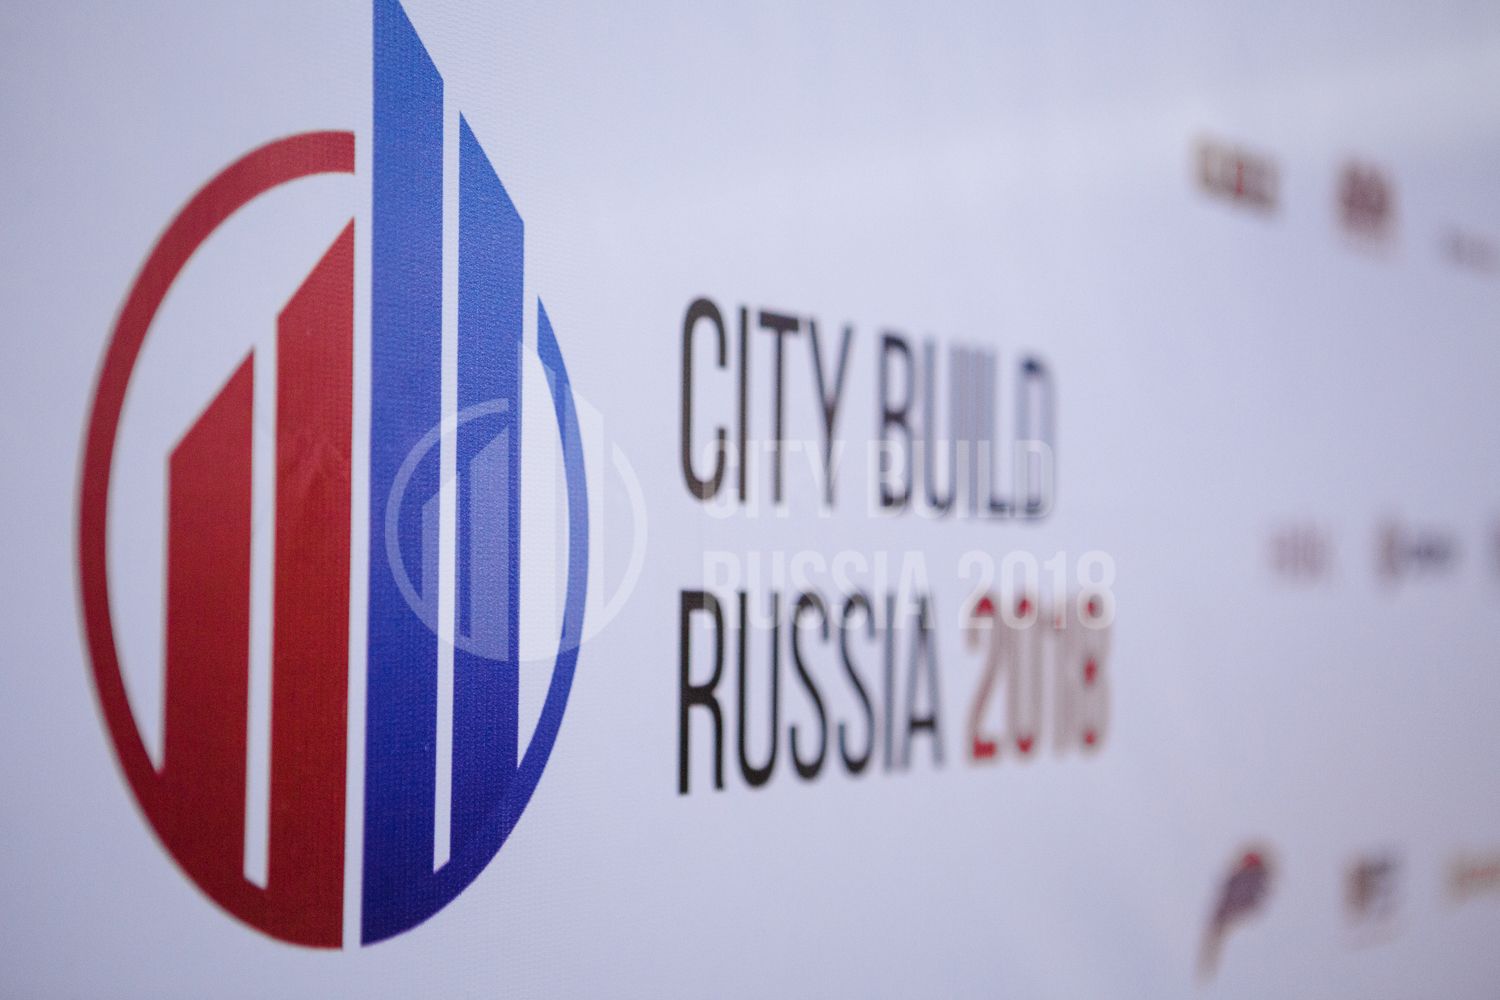 Citybuildrussia-2018